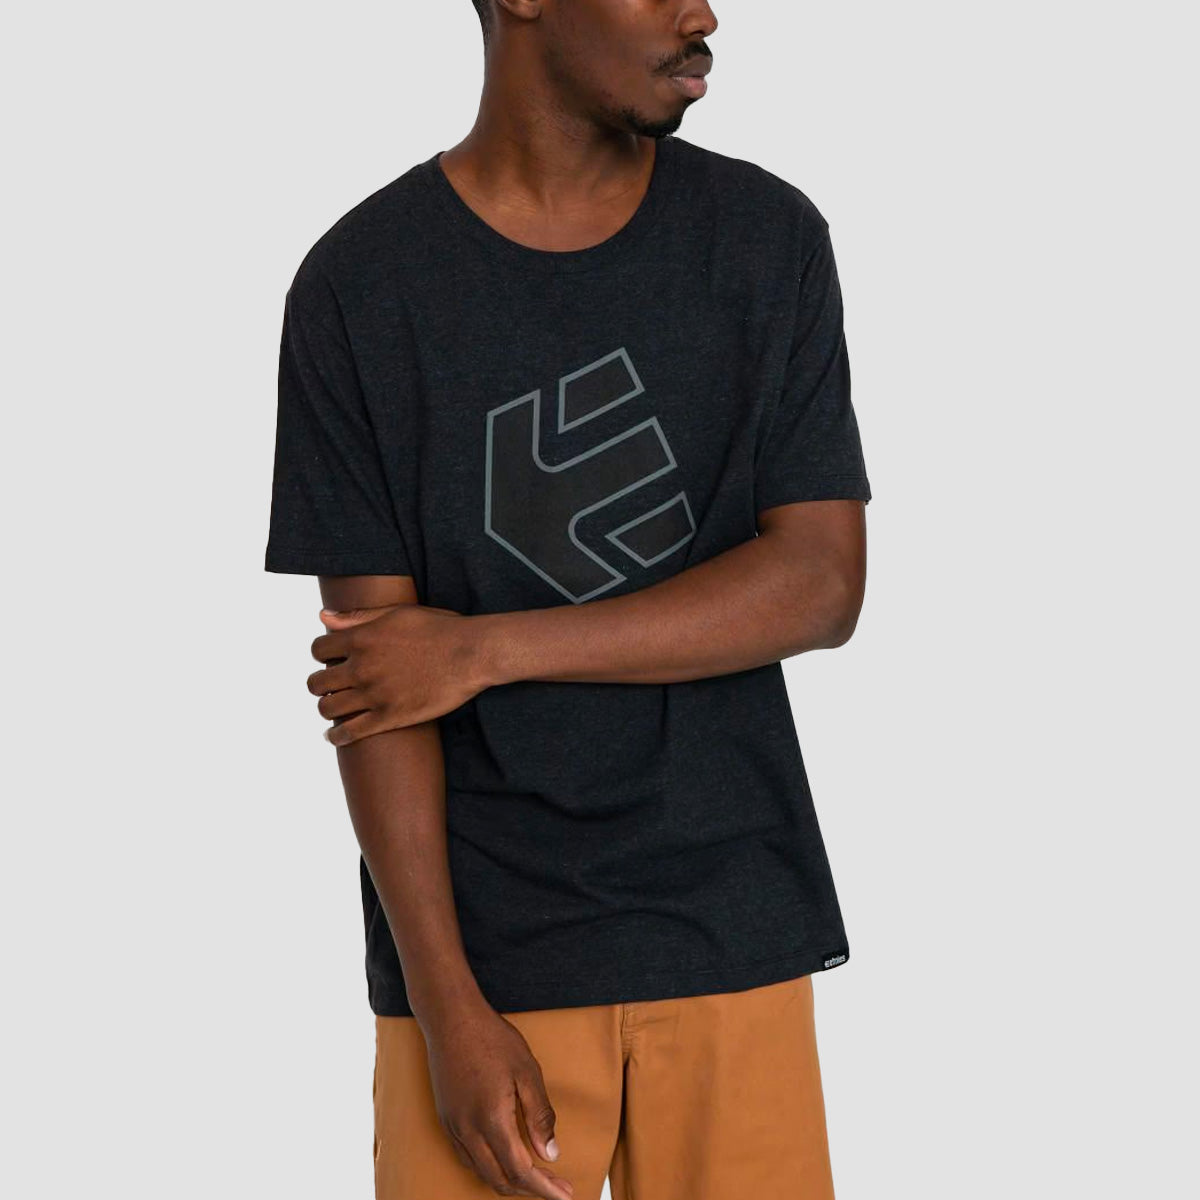 Etnies Crank Tech T-Shirt Black/Charcoal